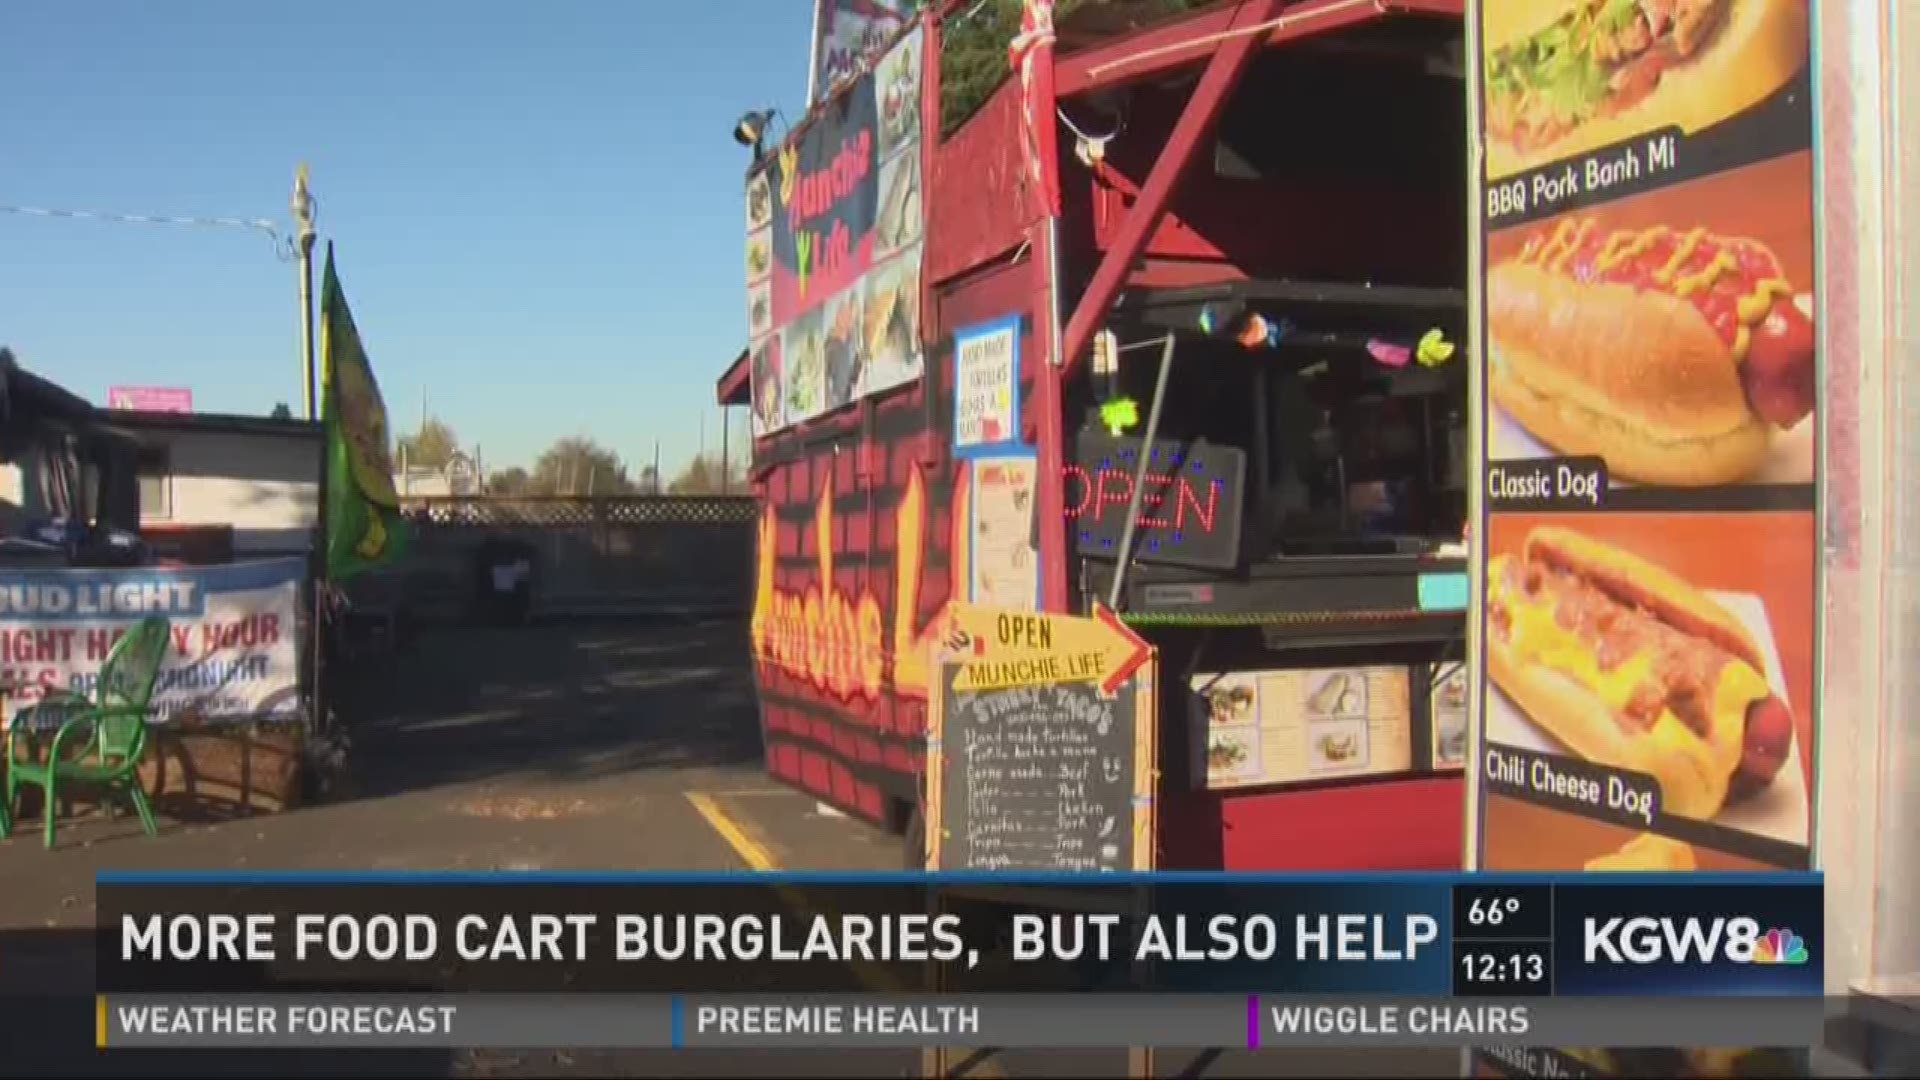 More food cart burglaries, but also help